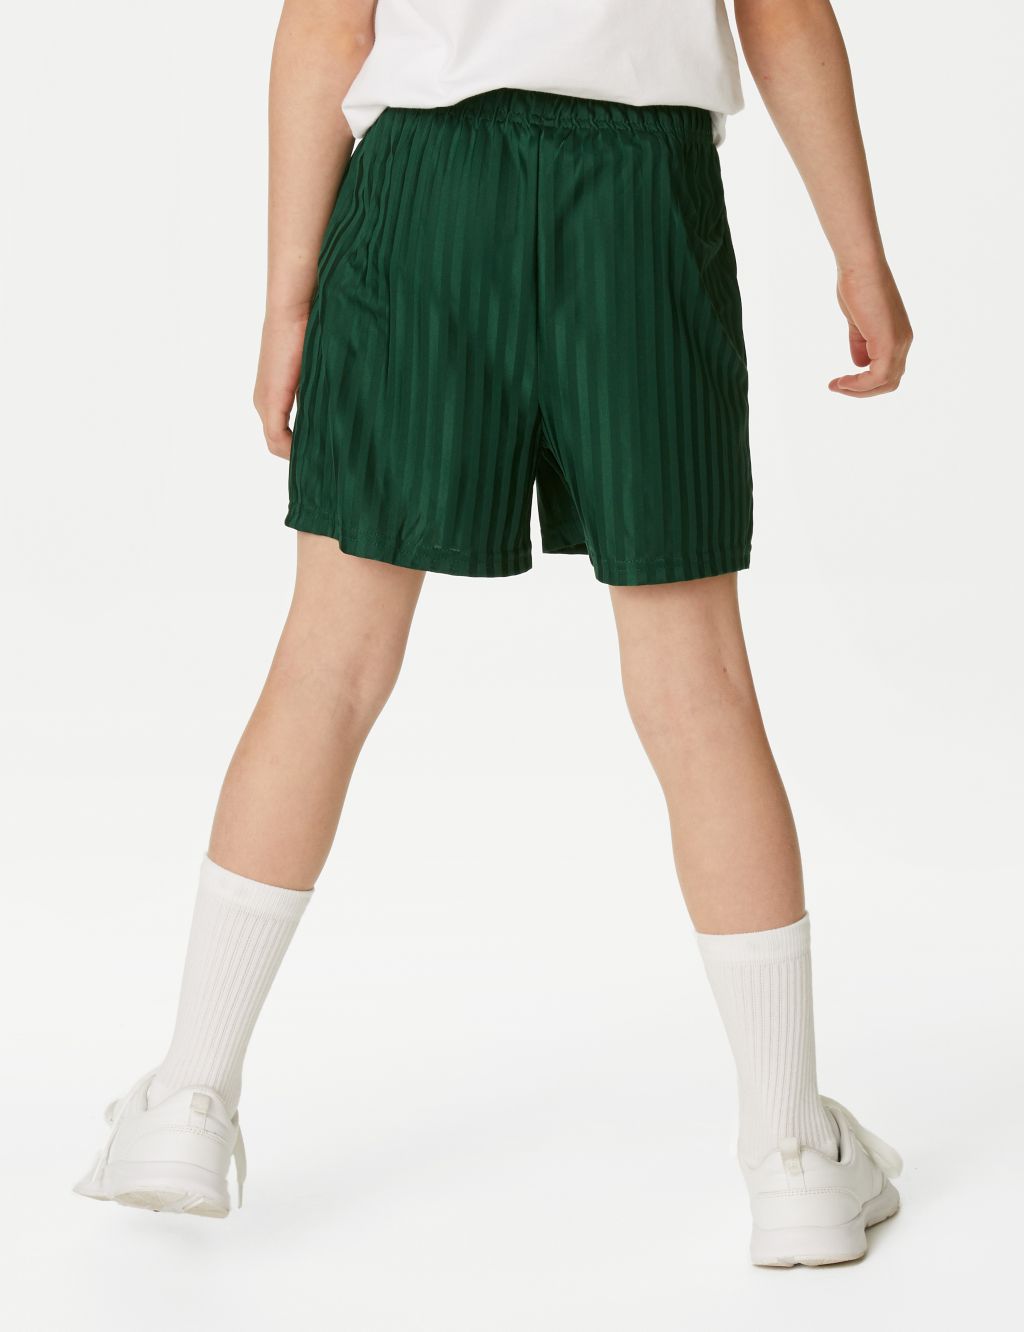 Unisex Sports School Shorts (2-16 Yrs) image 5